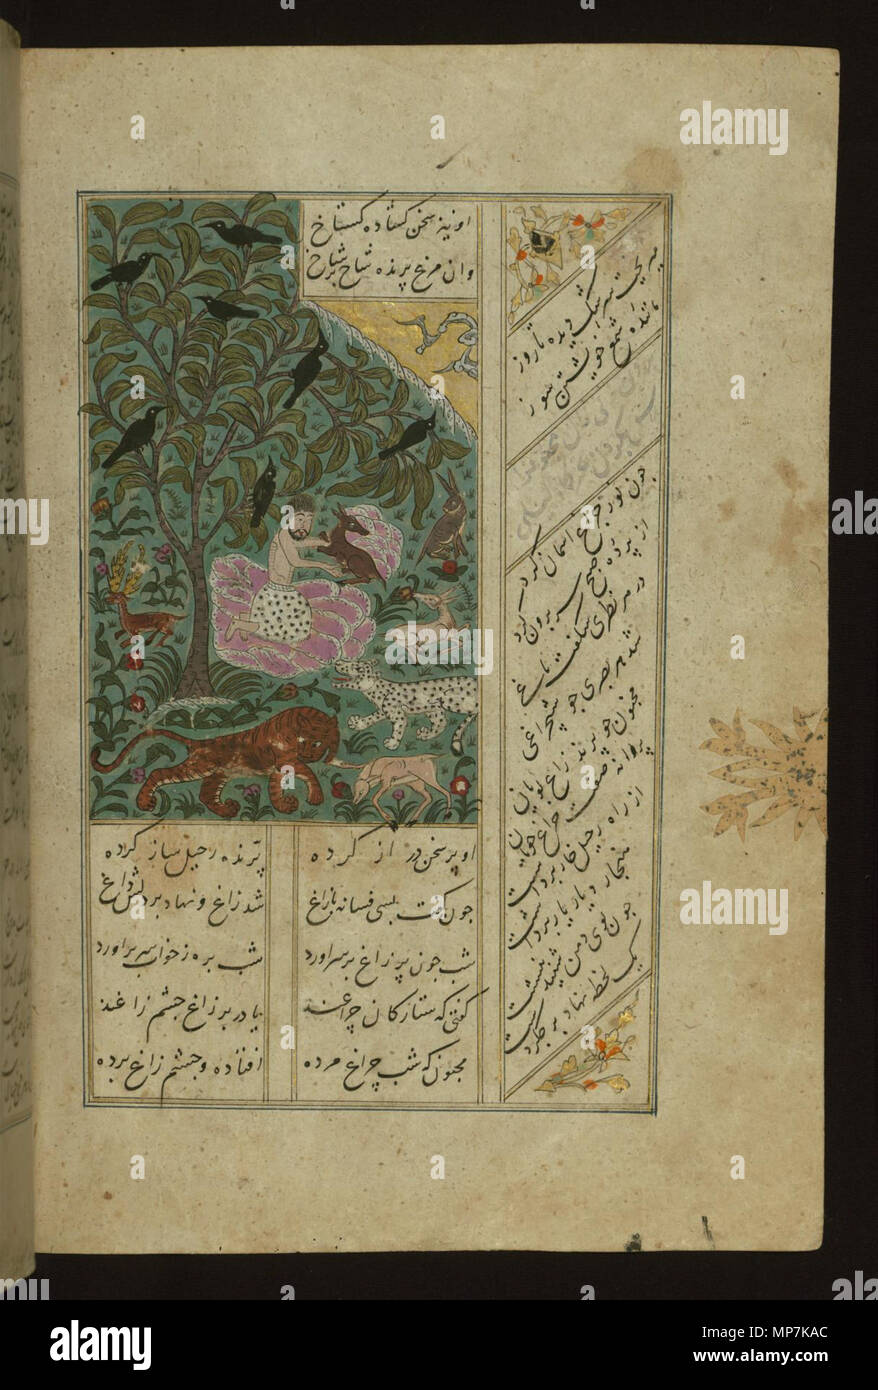 W.605.83b 692 Jamal al-Din Muhammad al-Siddiqi al-Isfahani - Majnun giocare con gli animali selvatici - Walters W60583B - Pagina completa Foto Stock